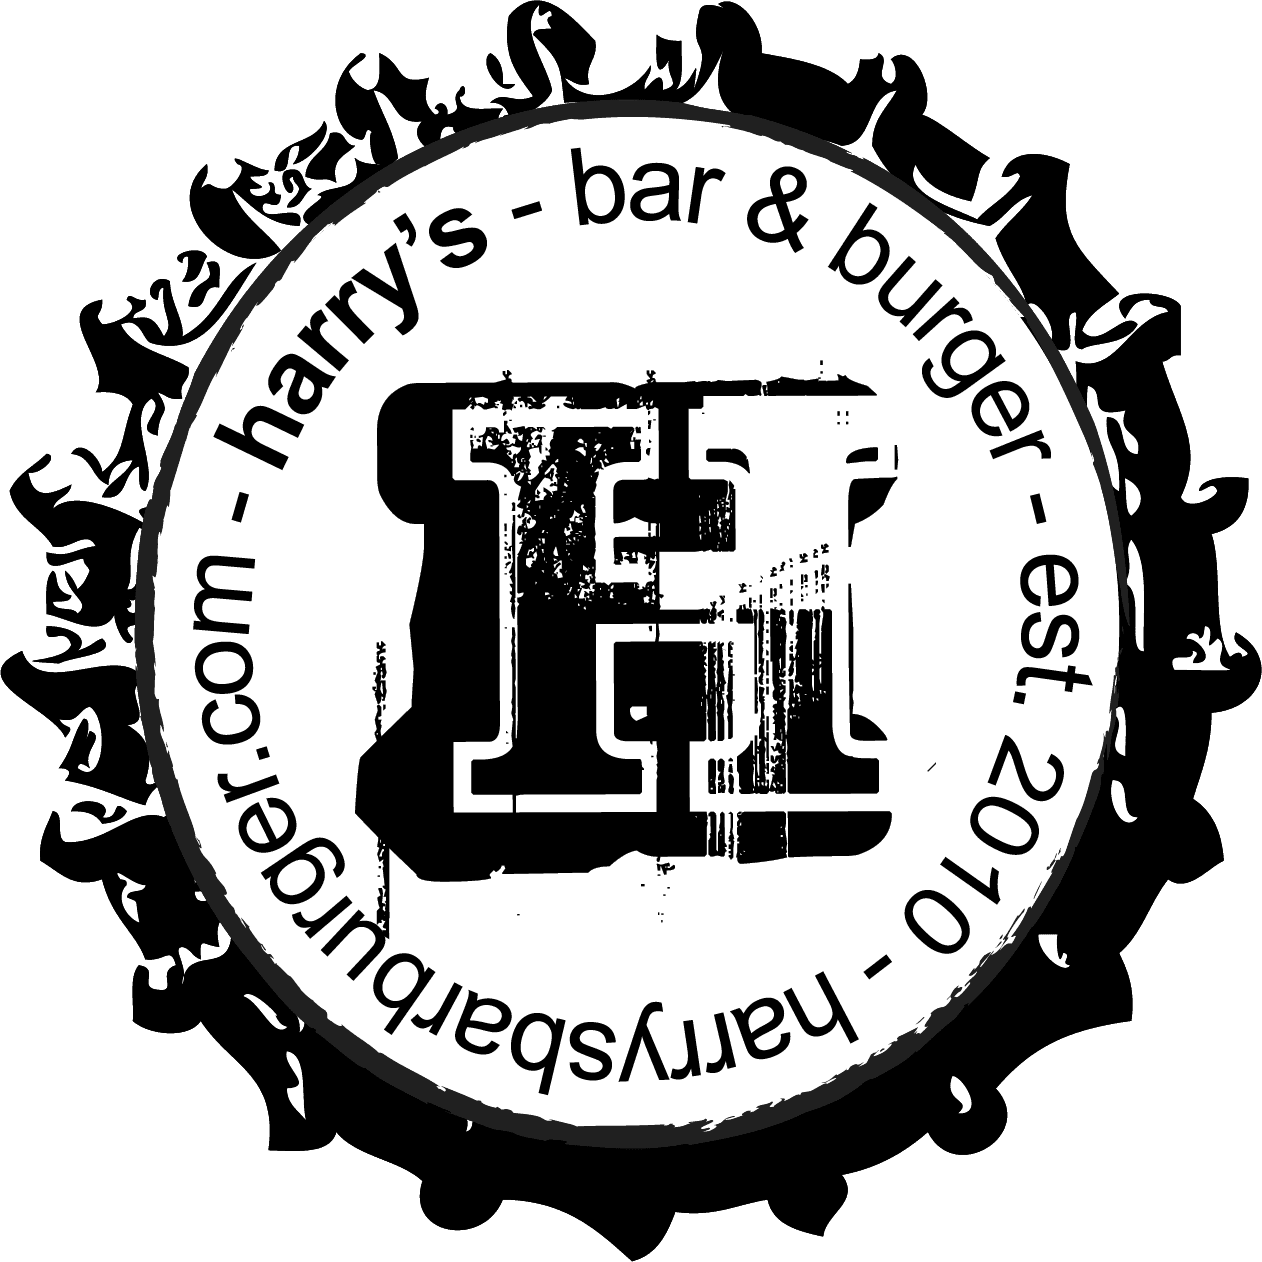 Harry's Bar & Burger